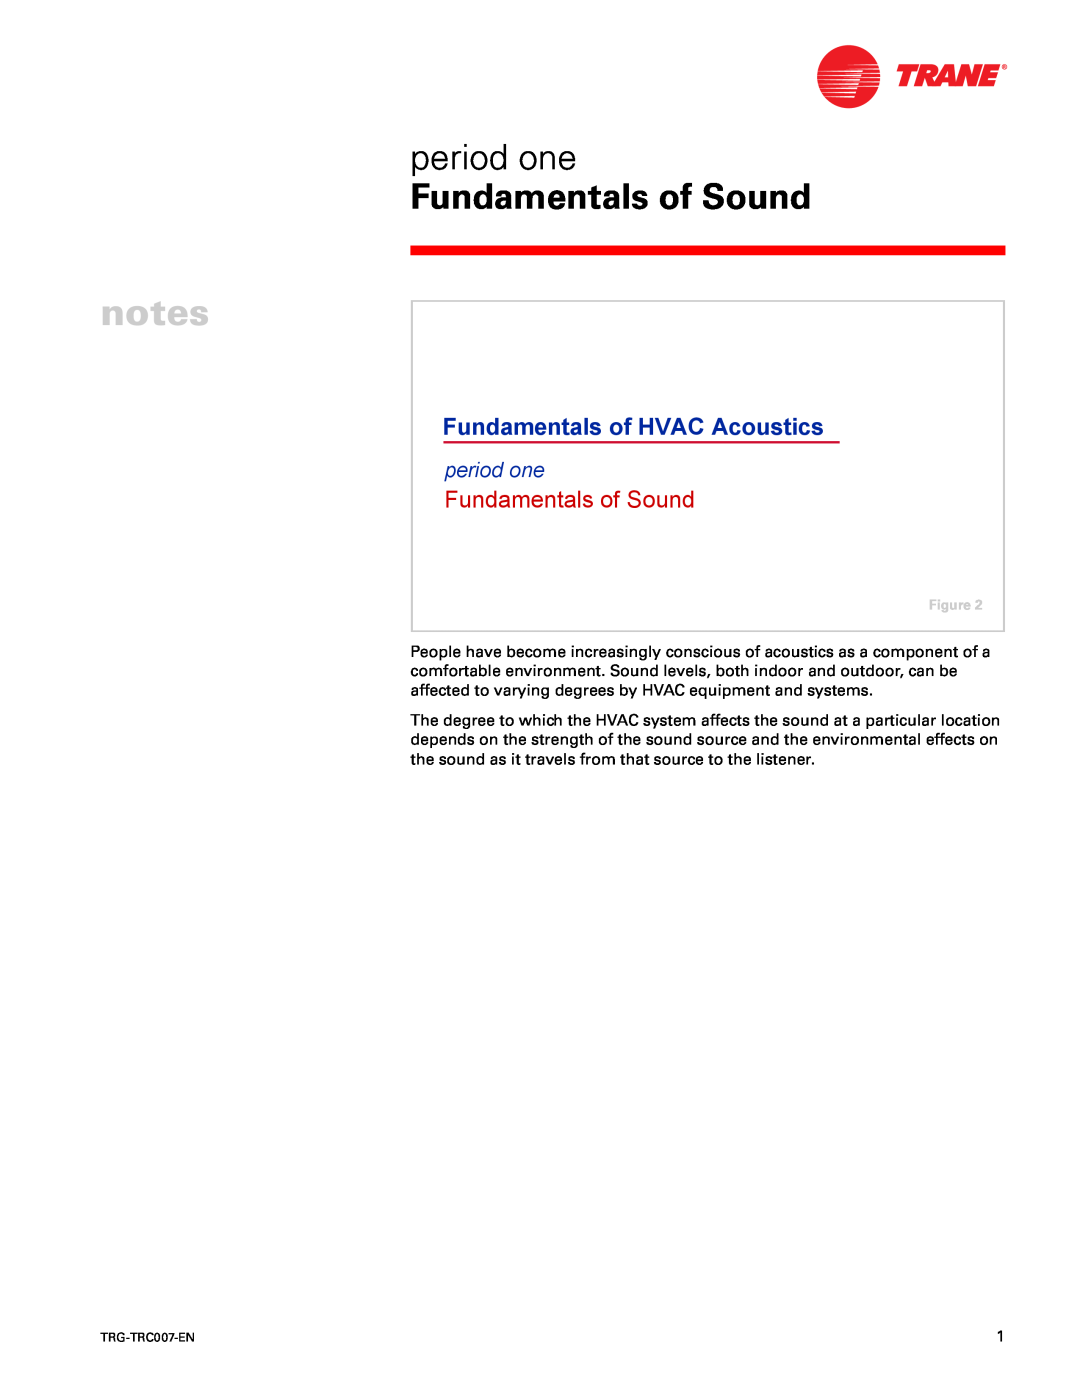 Trane TRG-TRC007-EN manual period one, Fundamentals of Sound, Fundamentals of HVAC Acoustics 